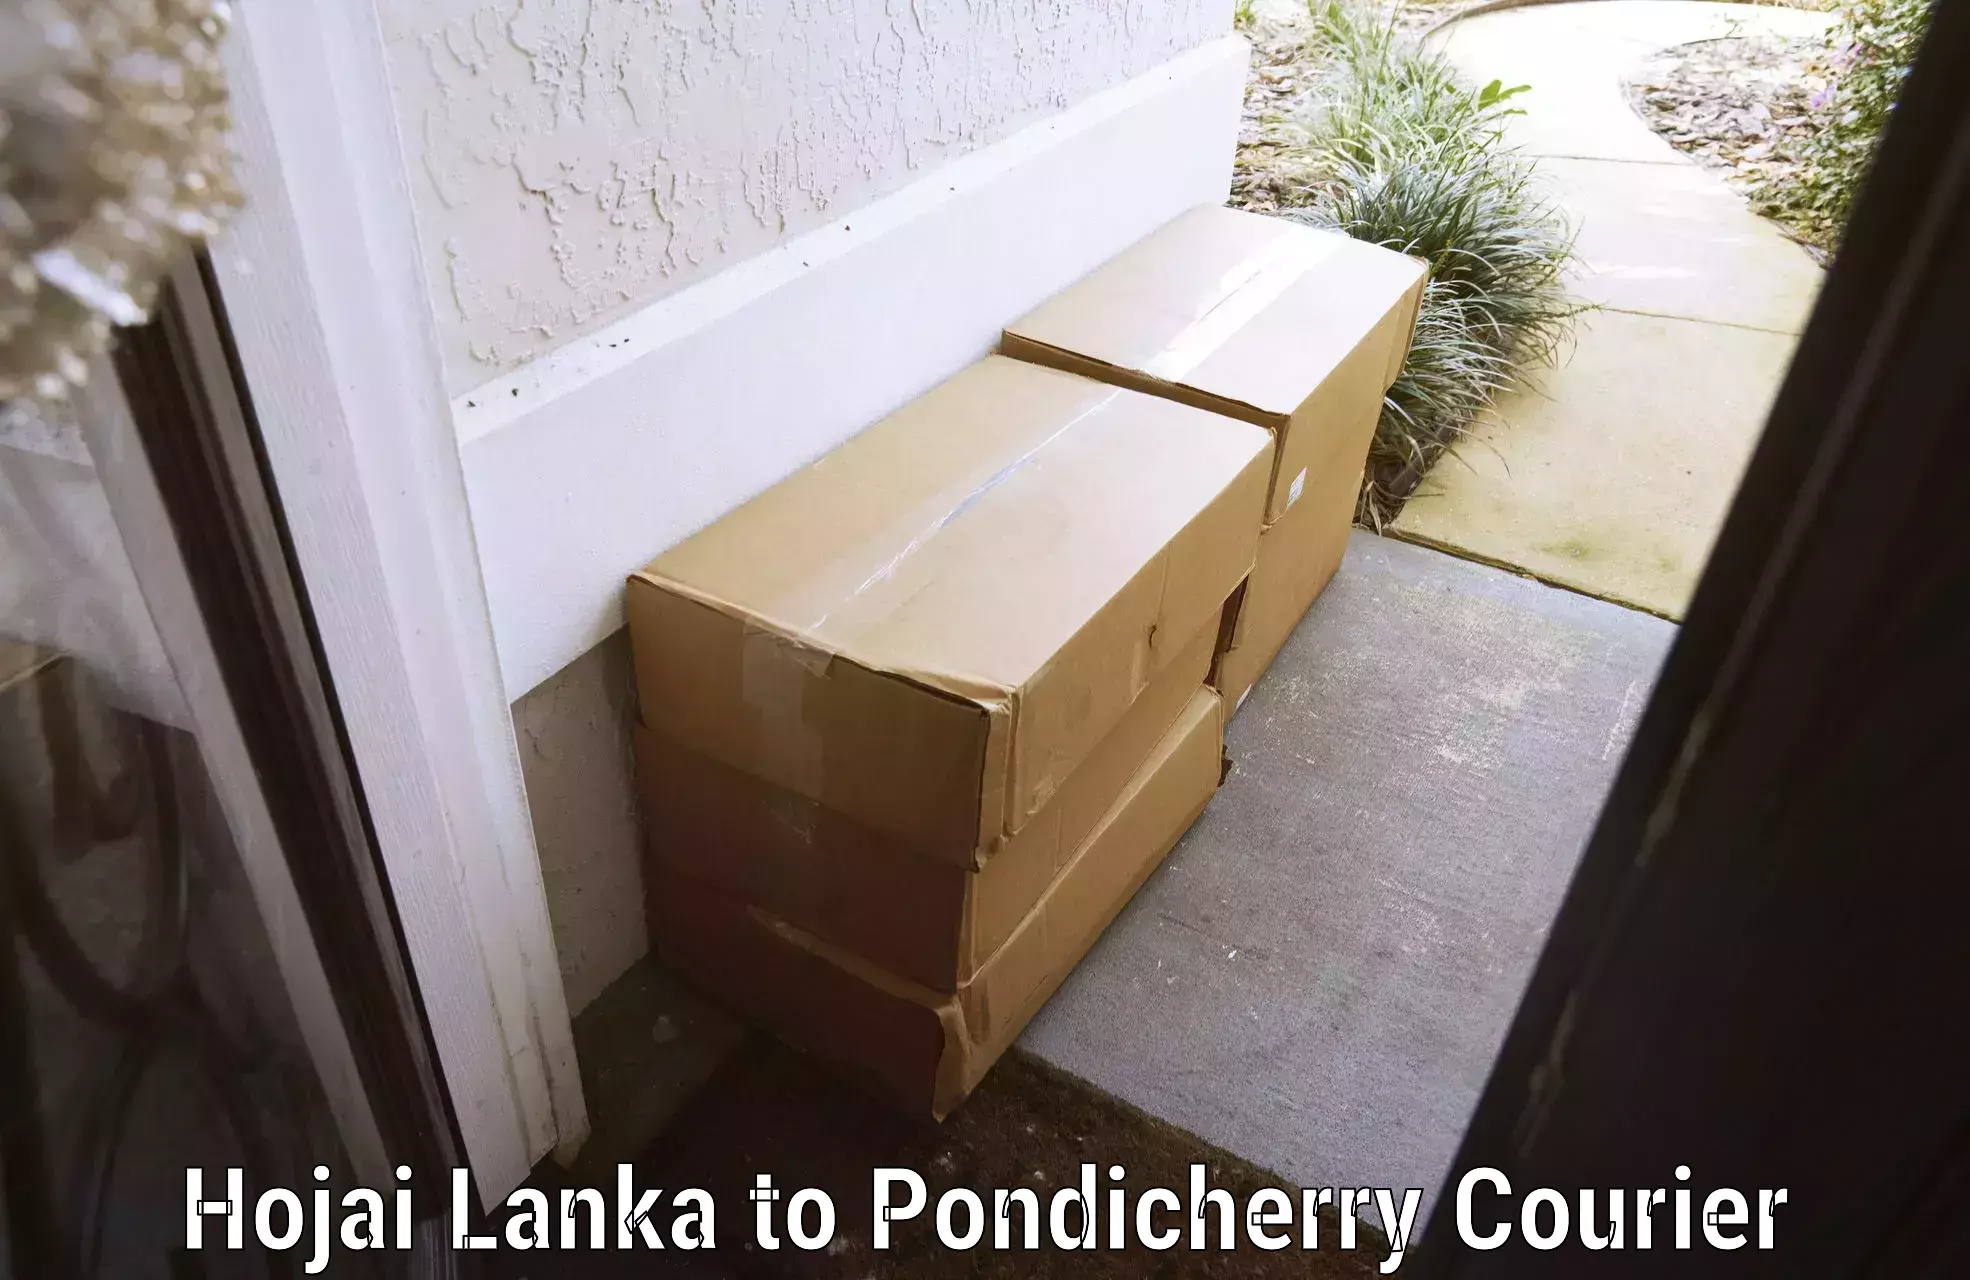 Baggage transport technology Hojai Lanka to Pondicherry